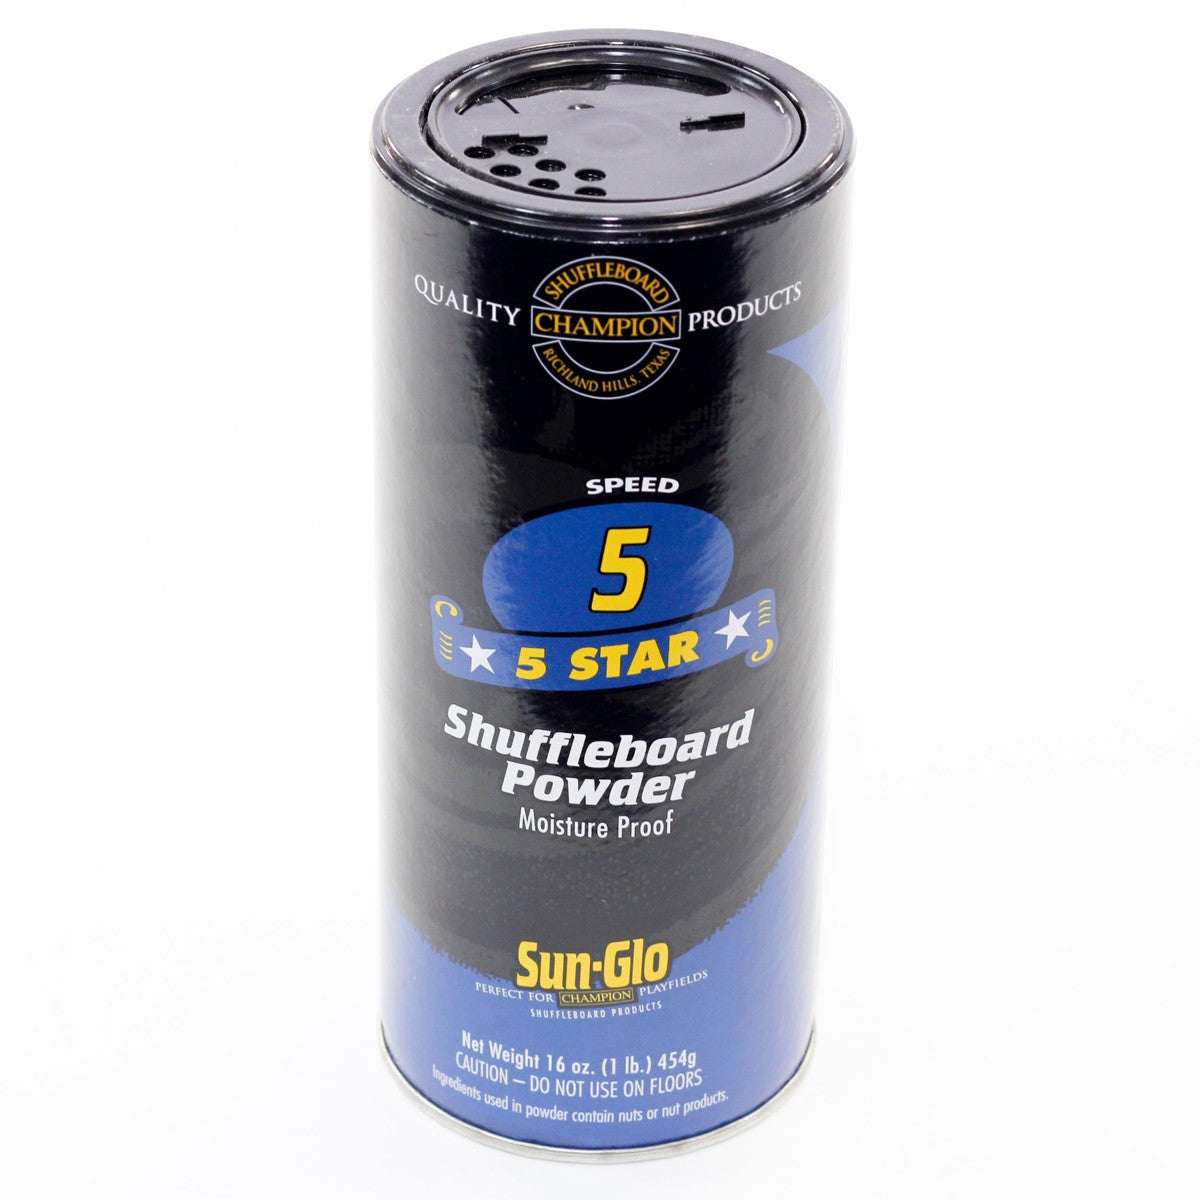 Triple Crown Silicone Spray, Triple Crown Shuffleboard Supplies